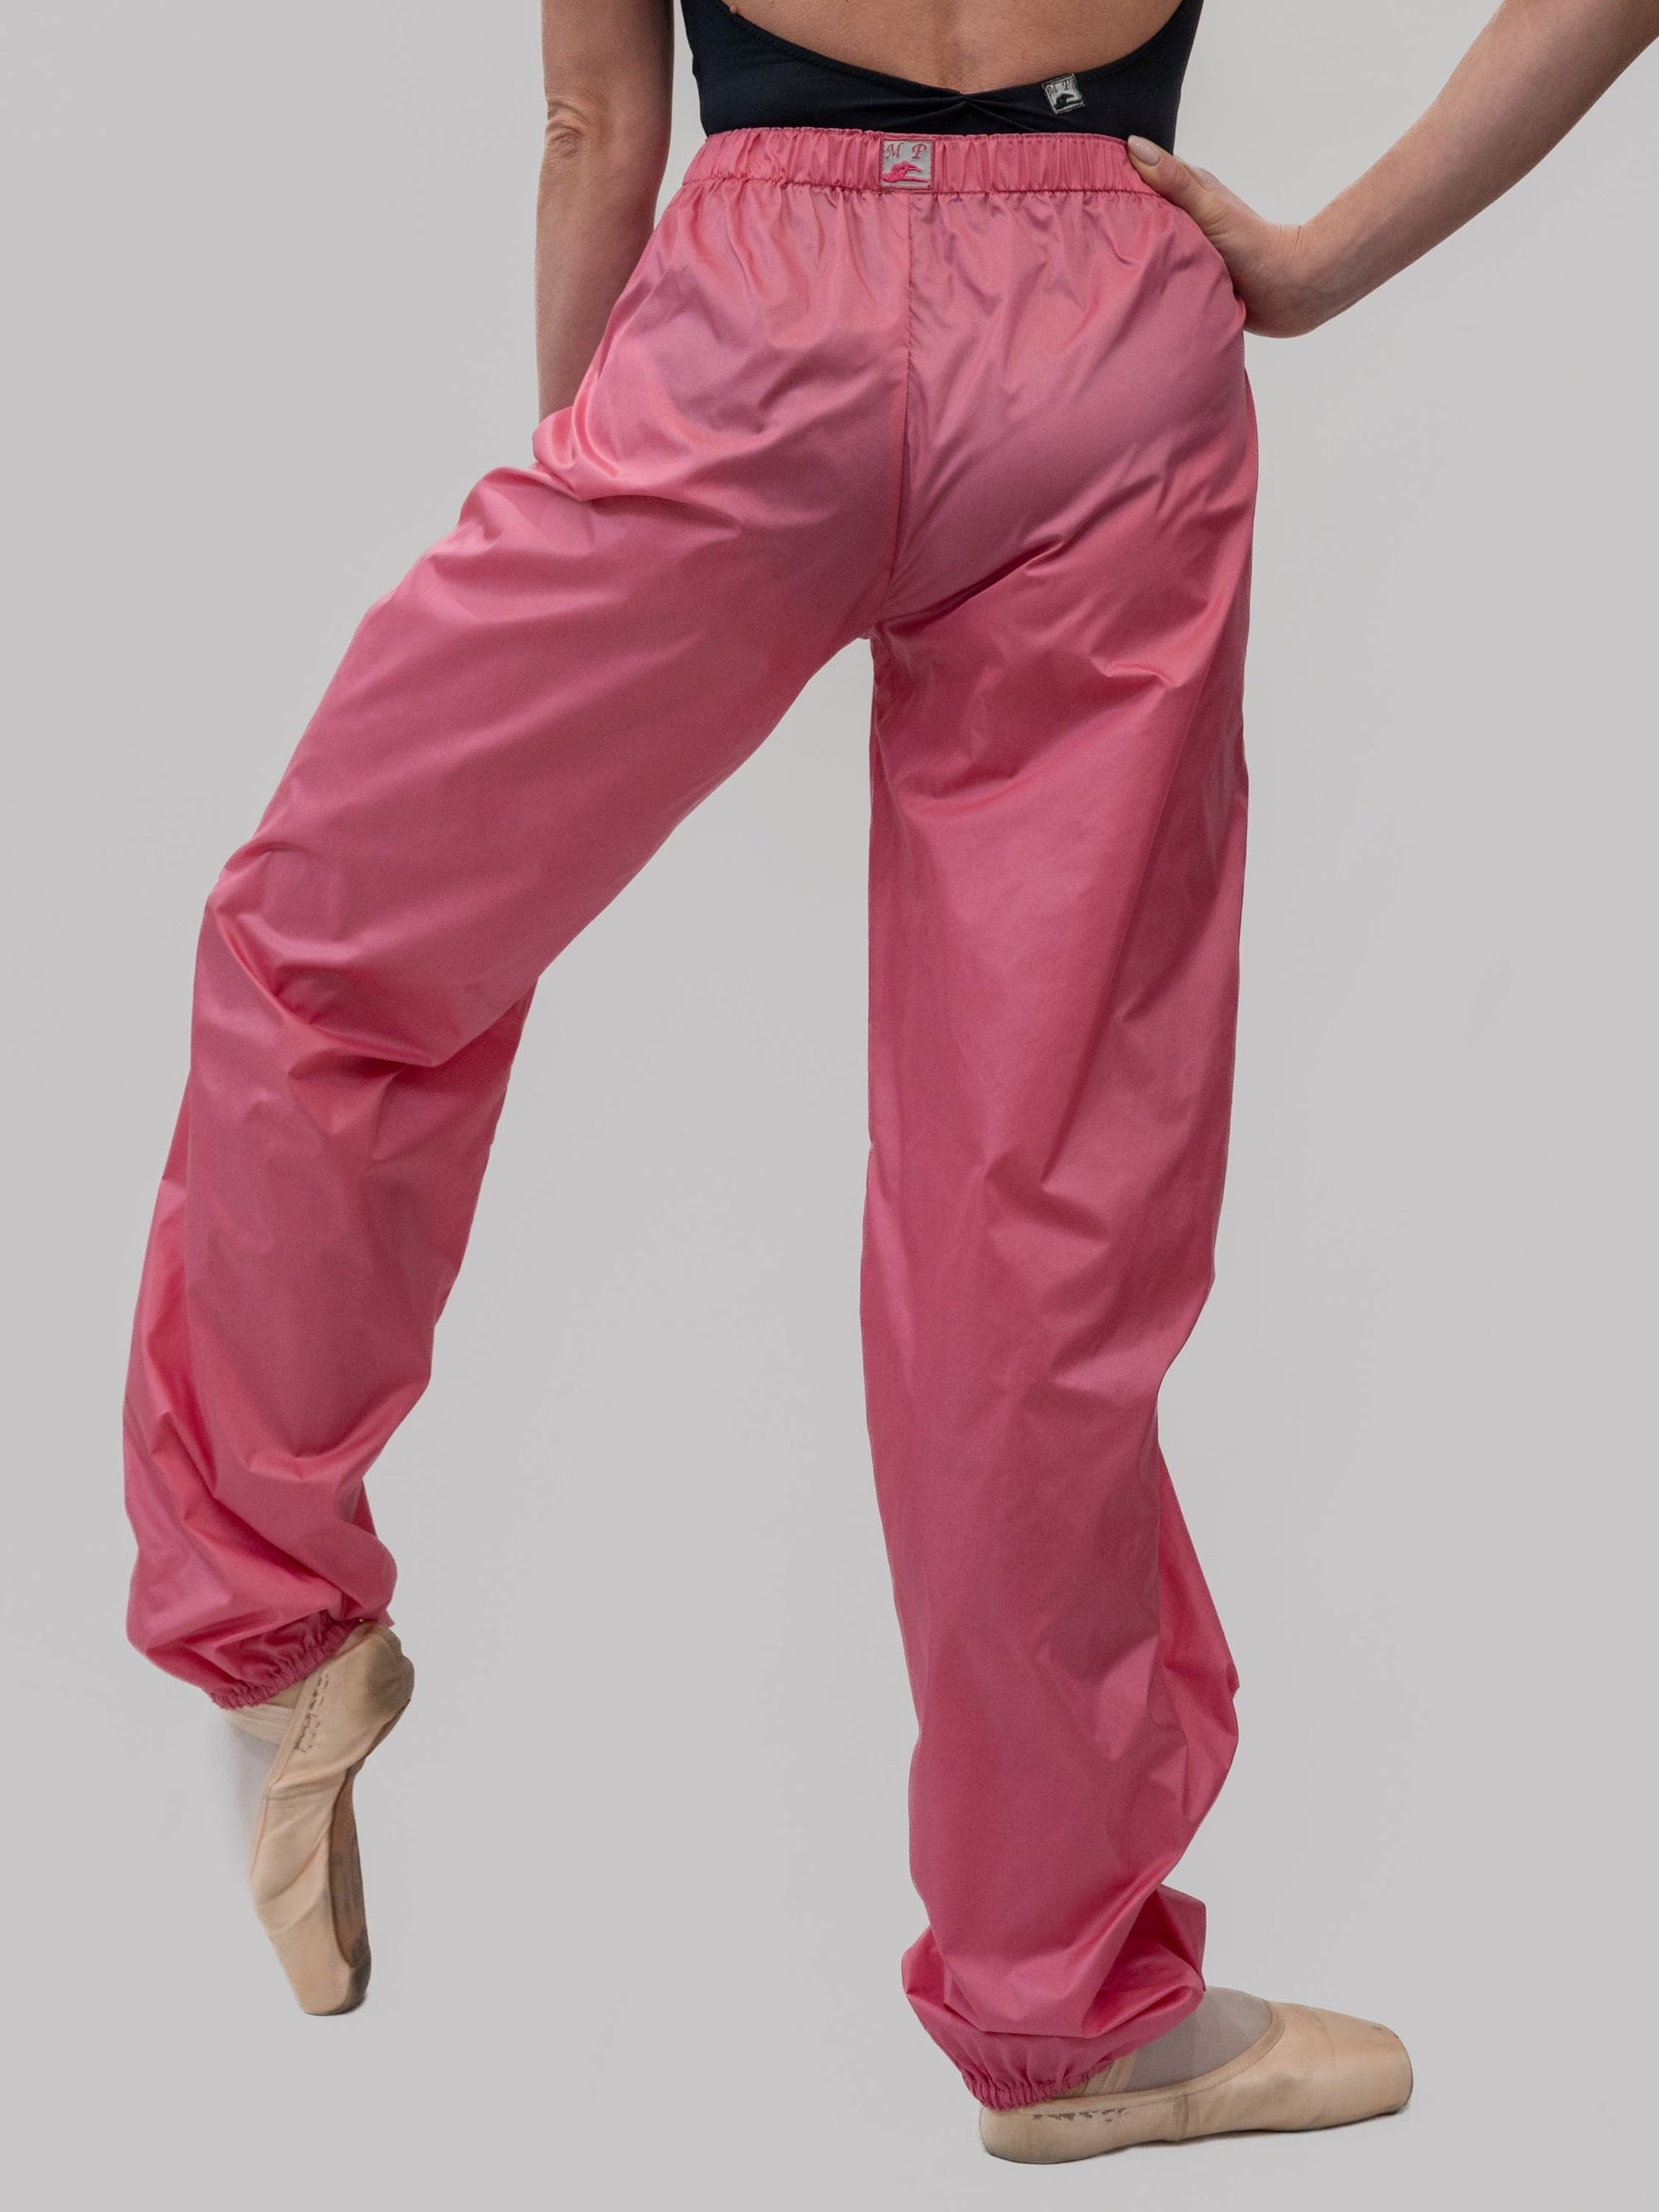 Brink Pink Dance Trash Bag Pants MP5003 - Atelier della Danza MP